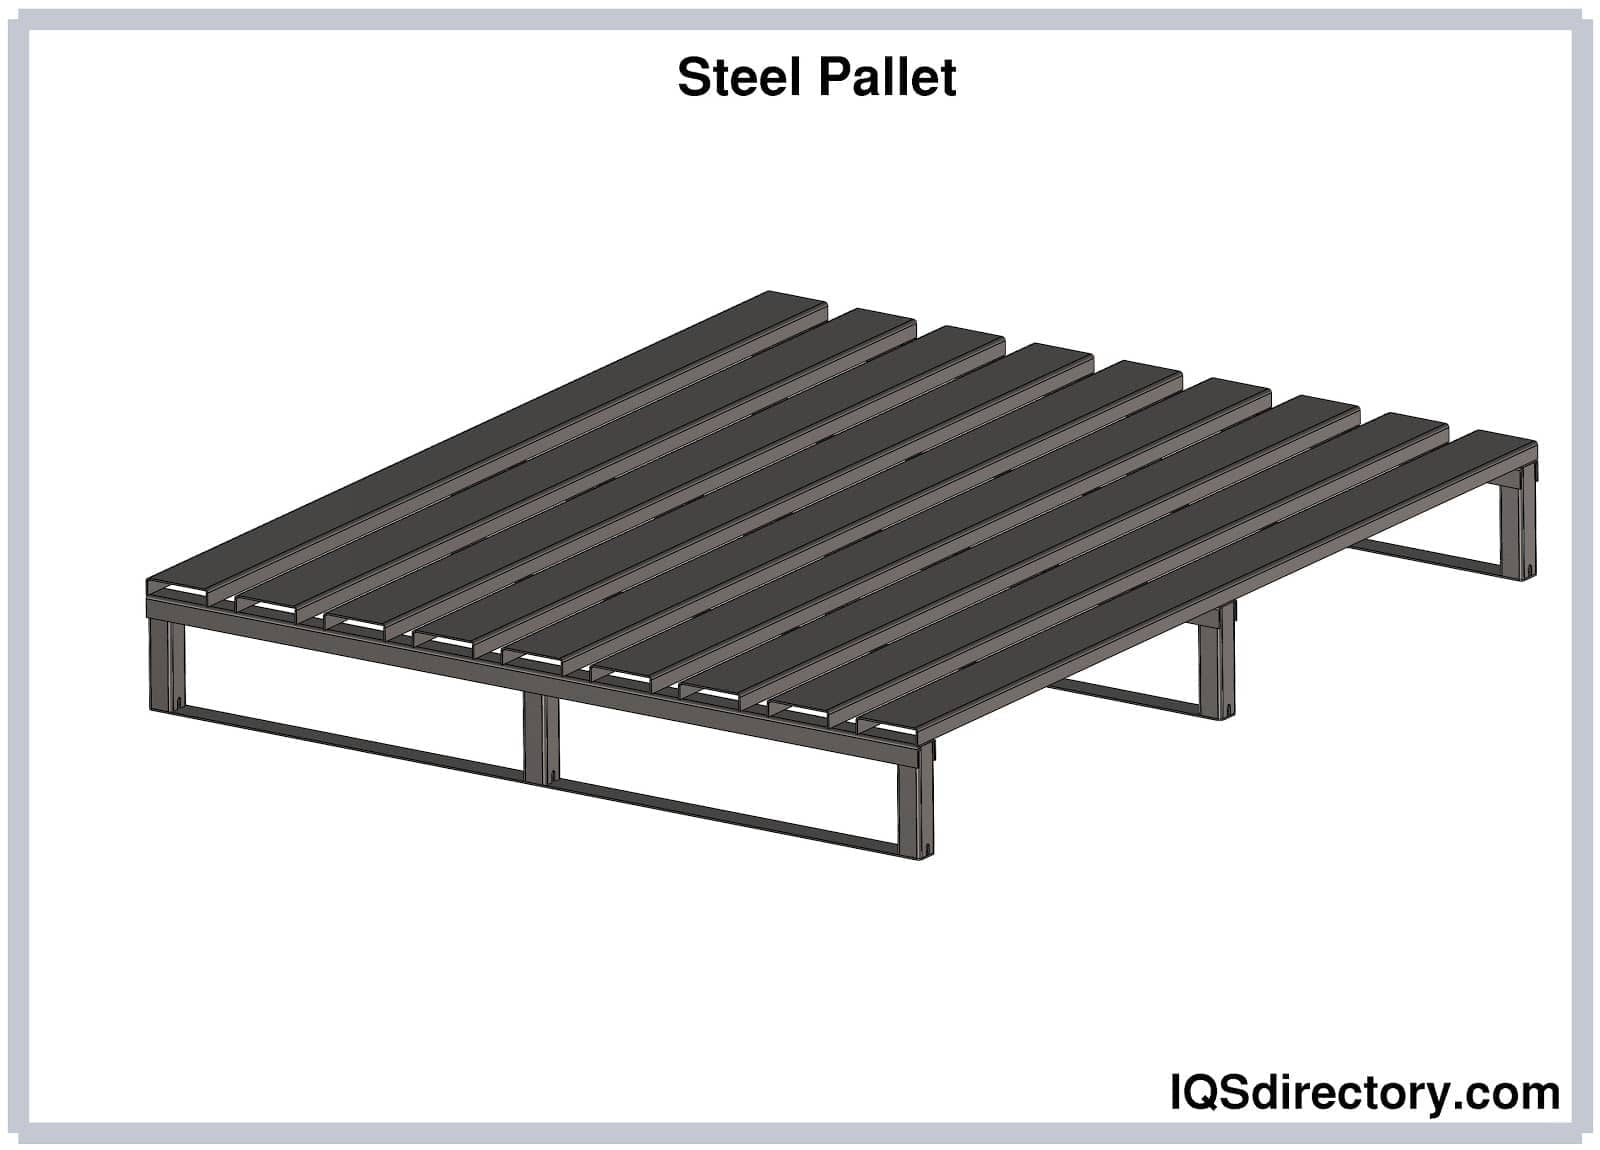 Steel Pallet